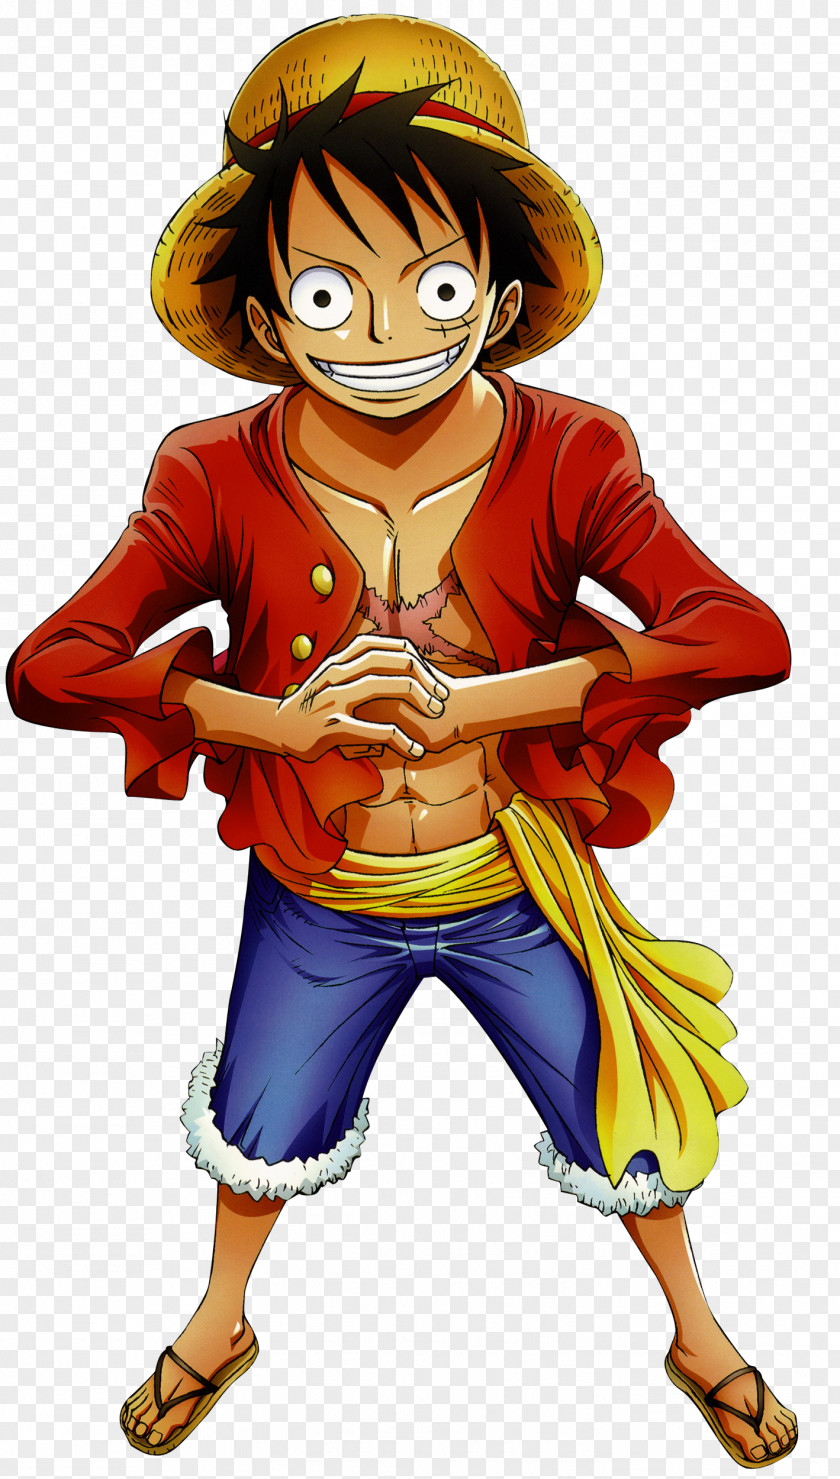 One Piece Monkey D. Luffy Garp Roronoa Zoro Nami PNG